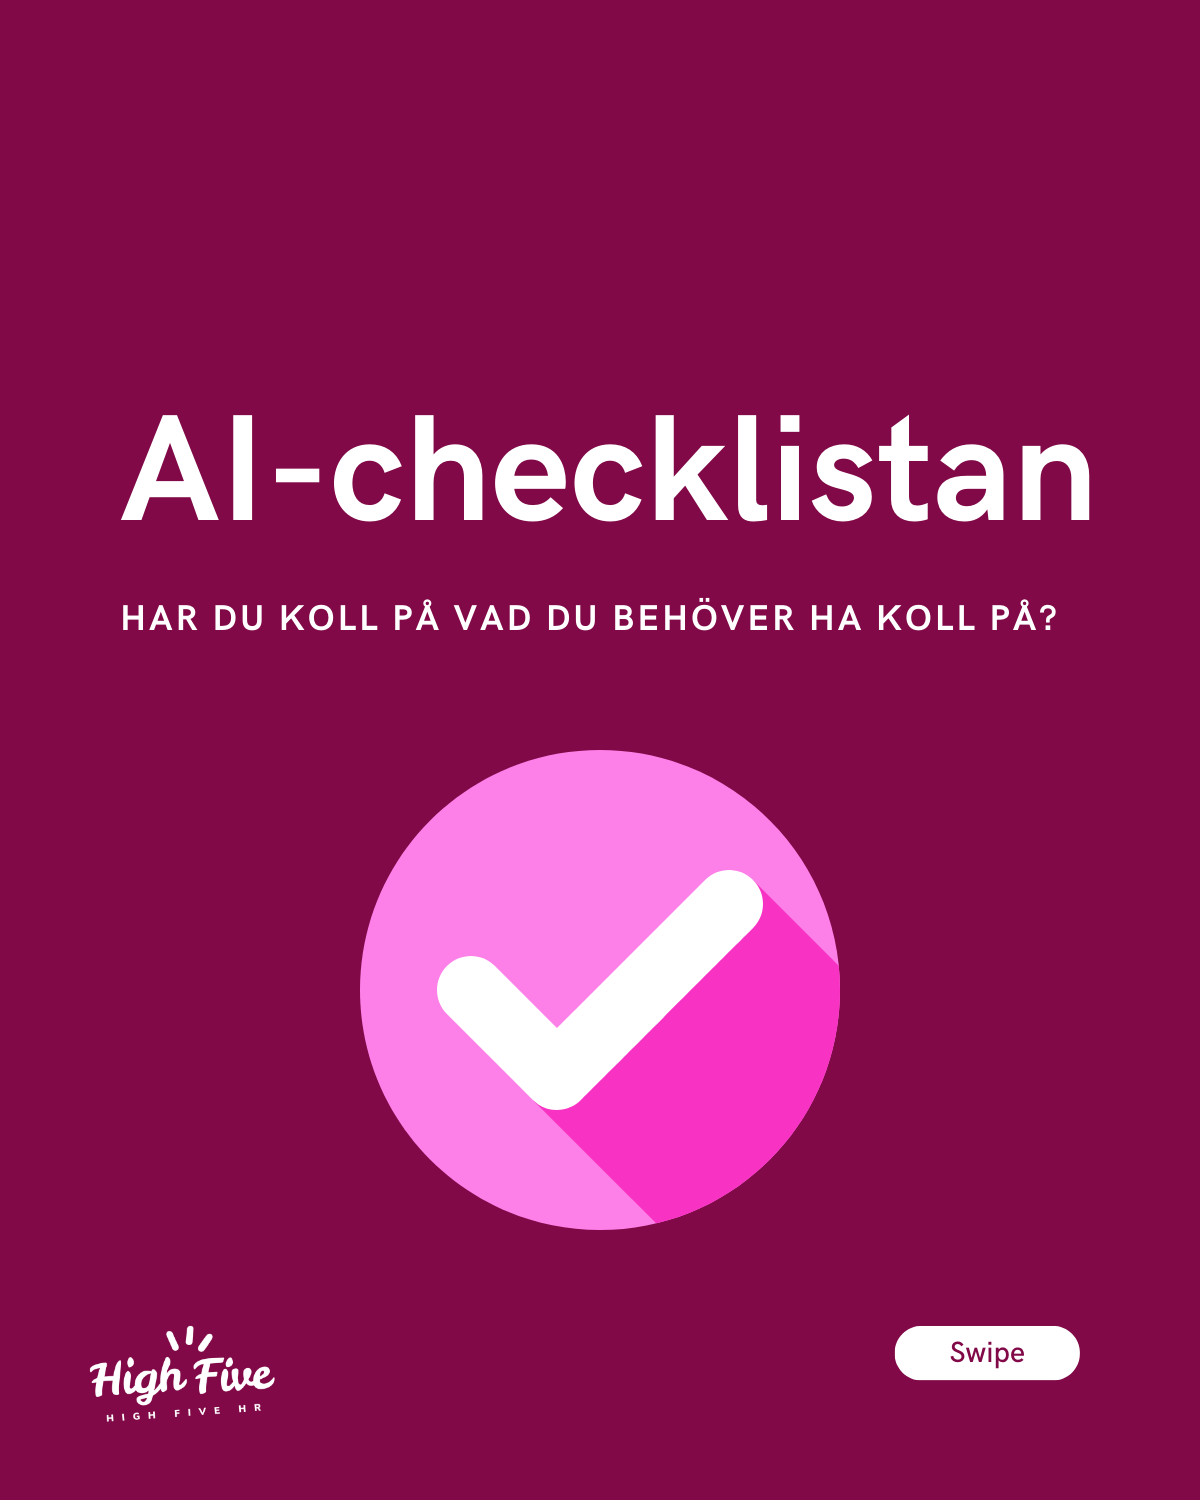 AI-checklistan